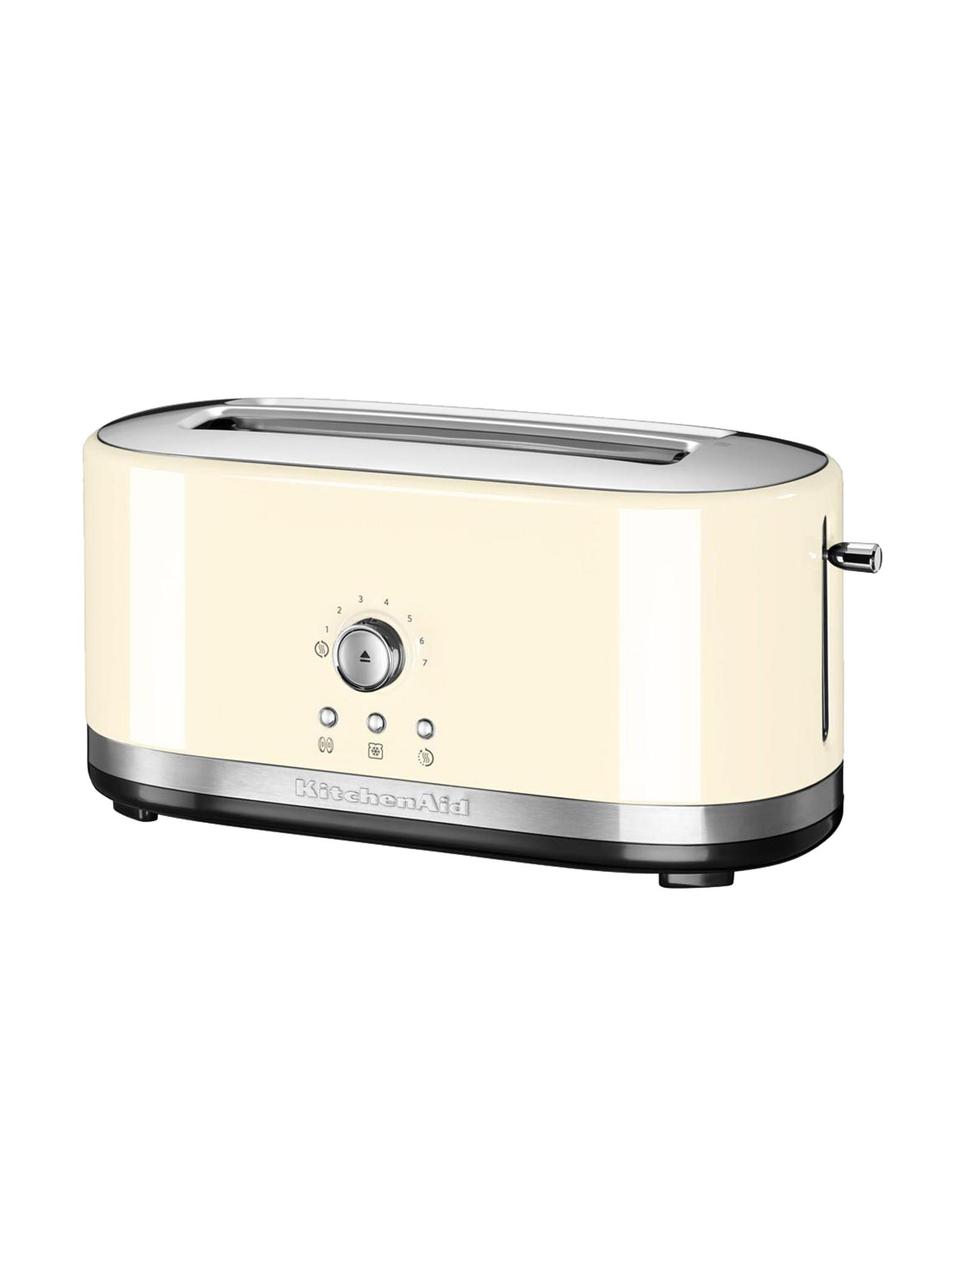 Langschlitz-Toaster KitchenAid, Gehäuse: Aluminiumdruckguss, Edels, Cremefarben, B 42 x H 20 cm